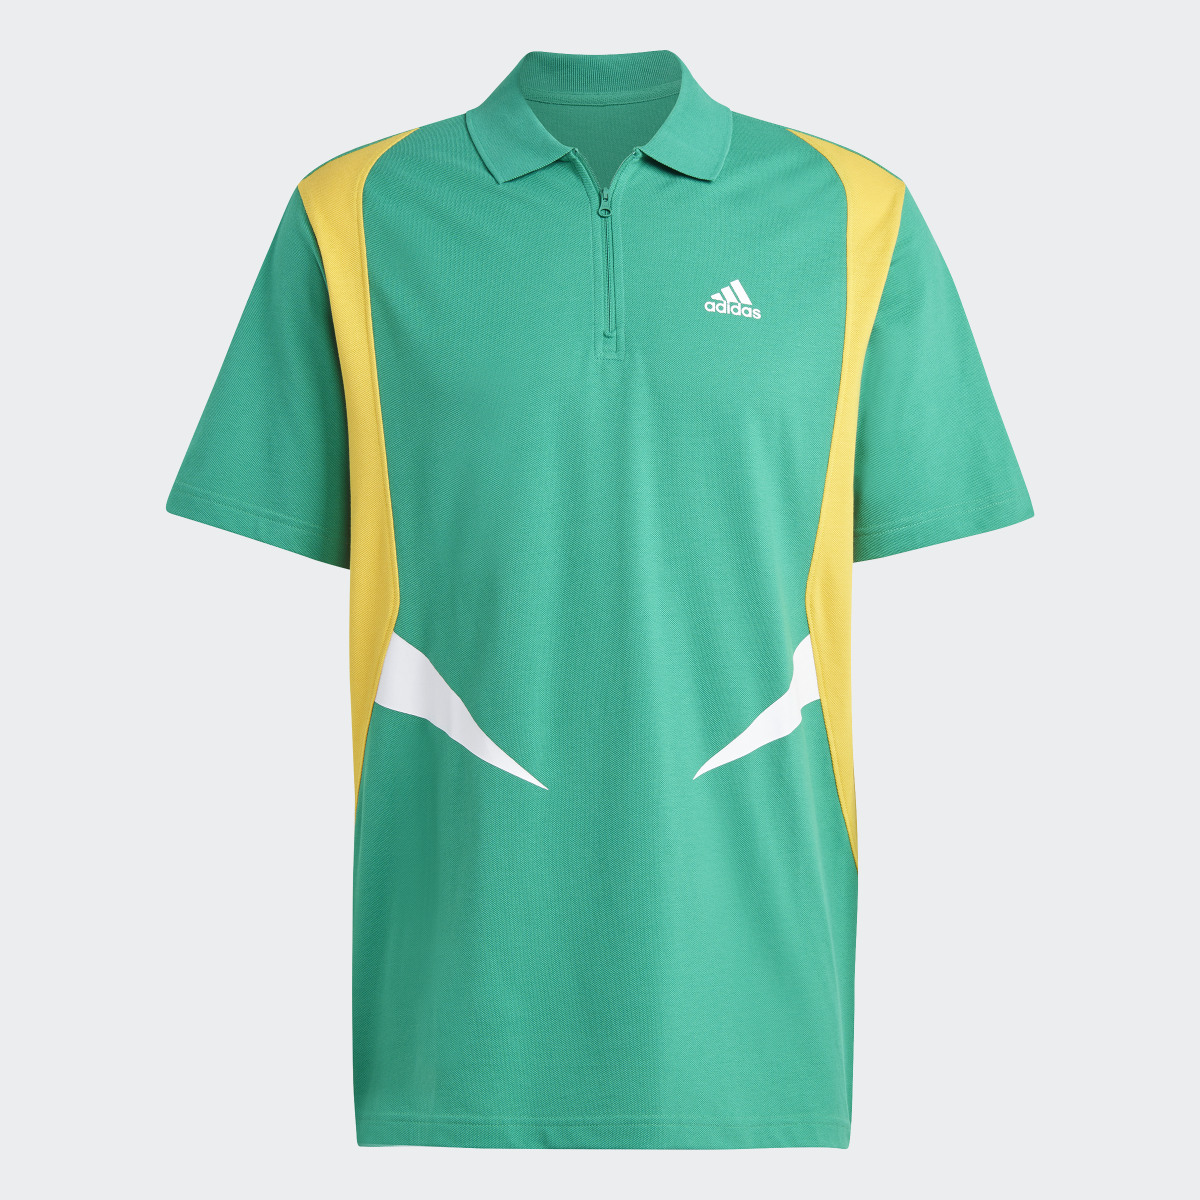 Adidas Colorblock Poloshirt. 5